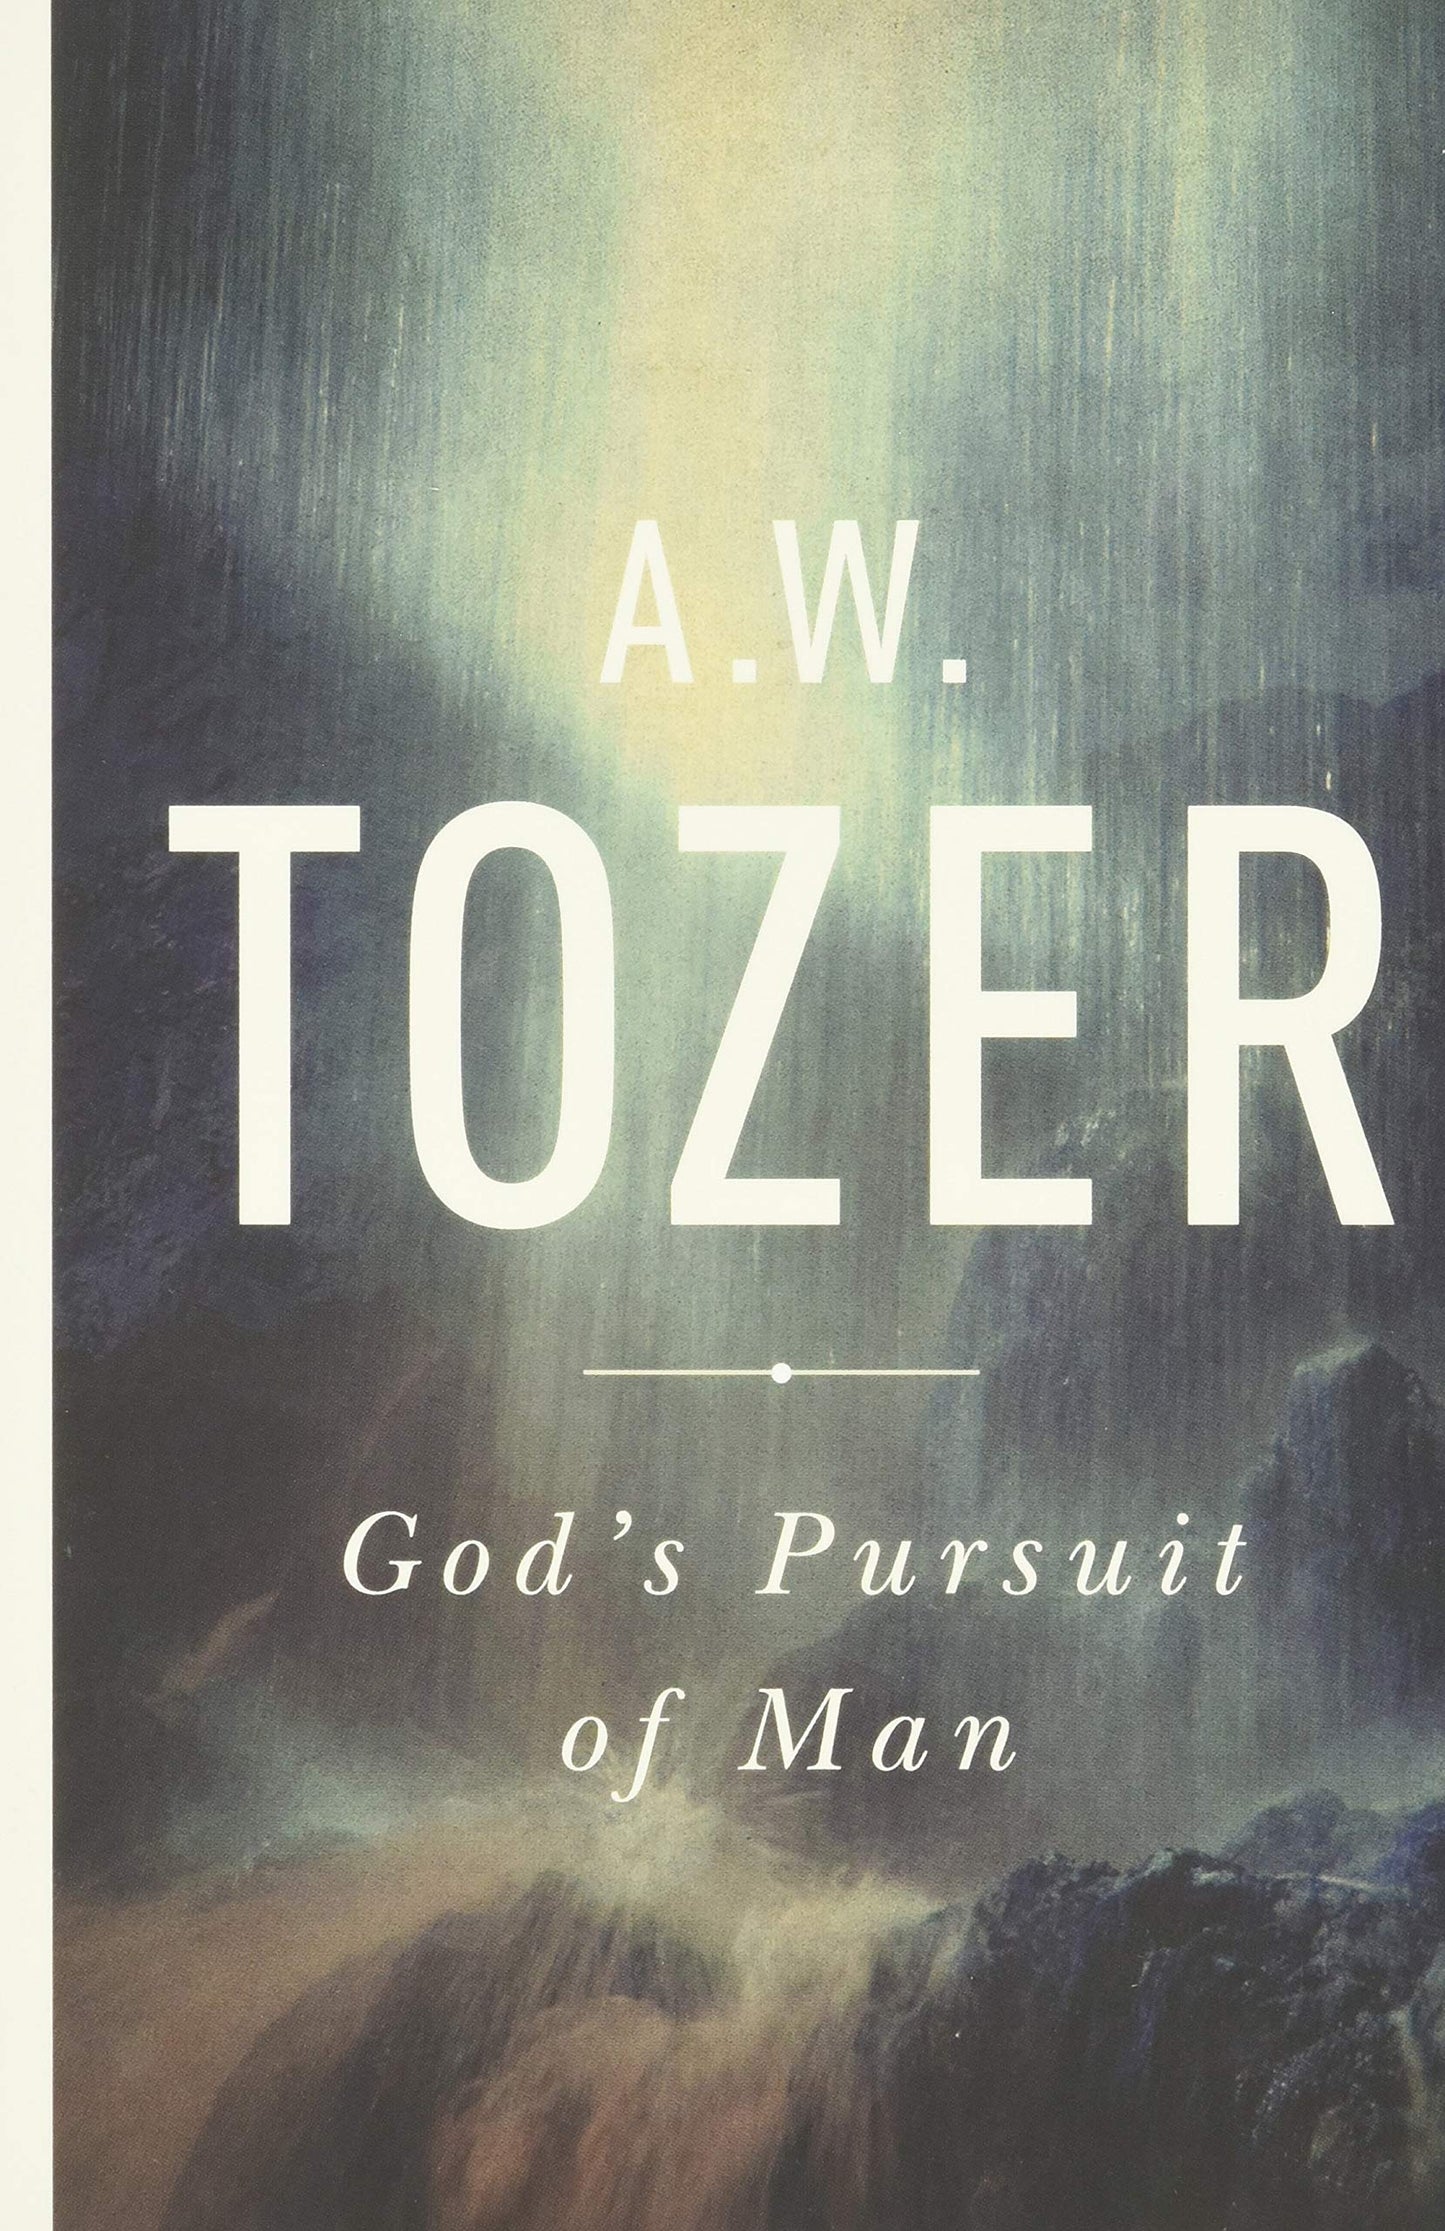 God's Pursuit of Man: Tozer's Profound Prequel to The Pursuit of God